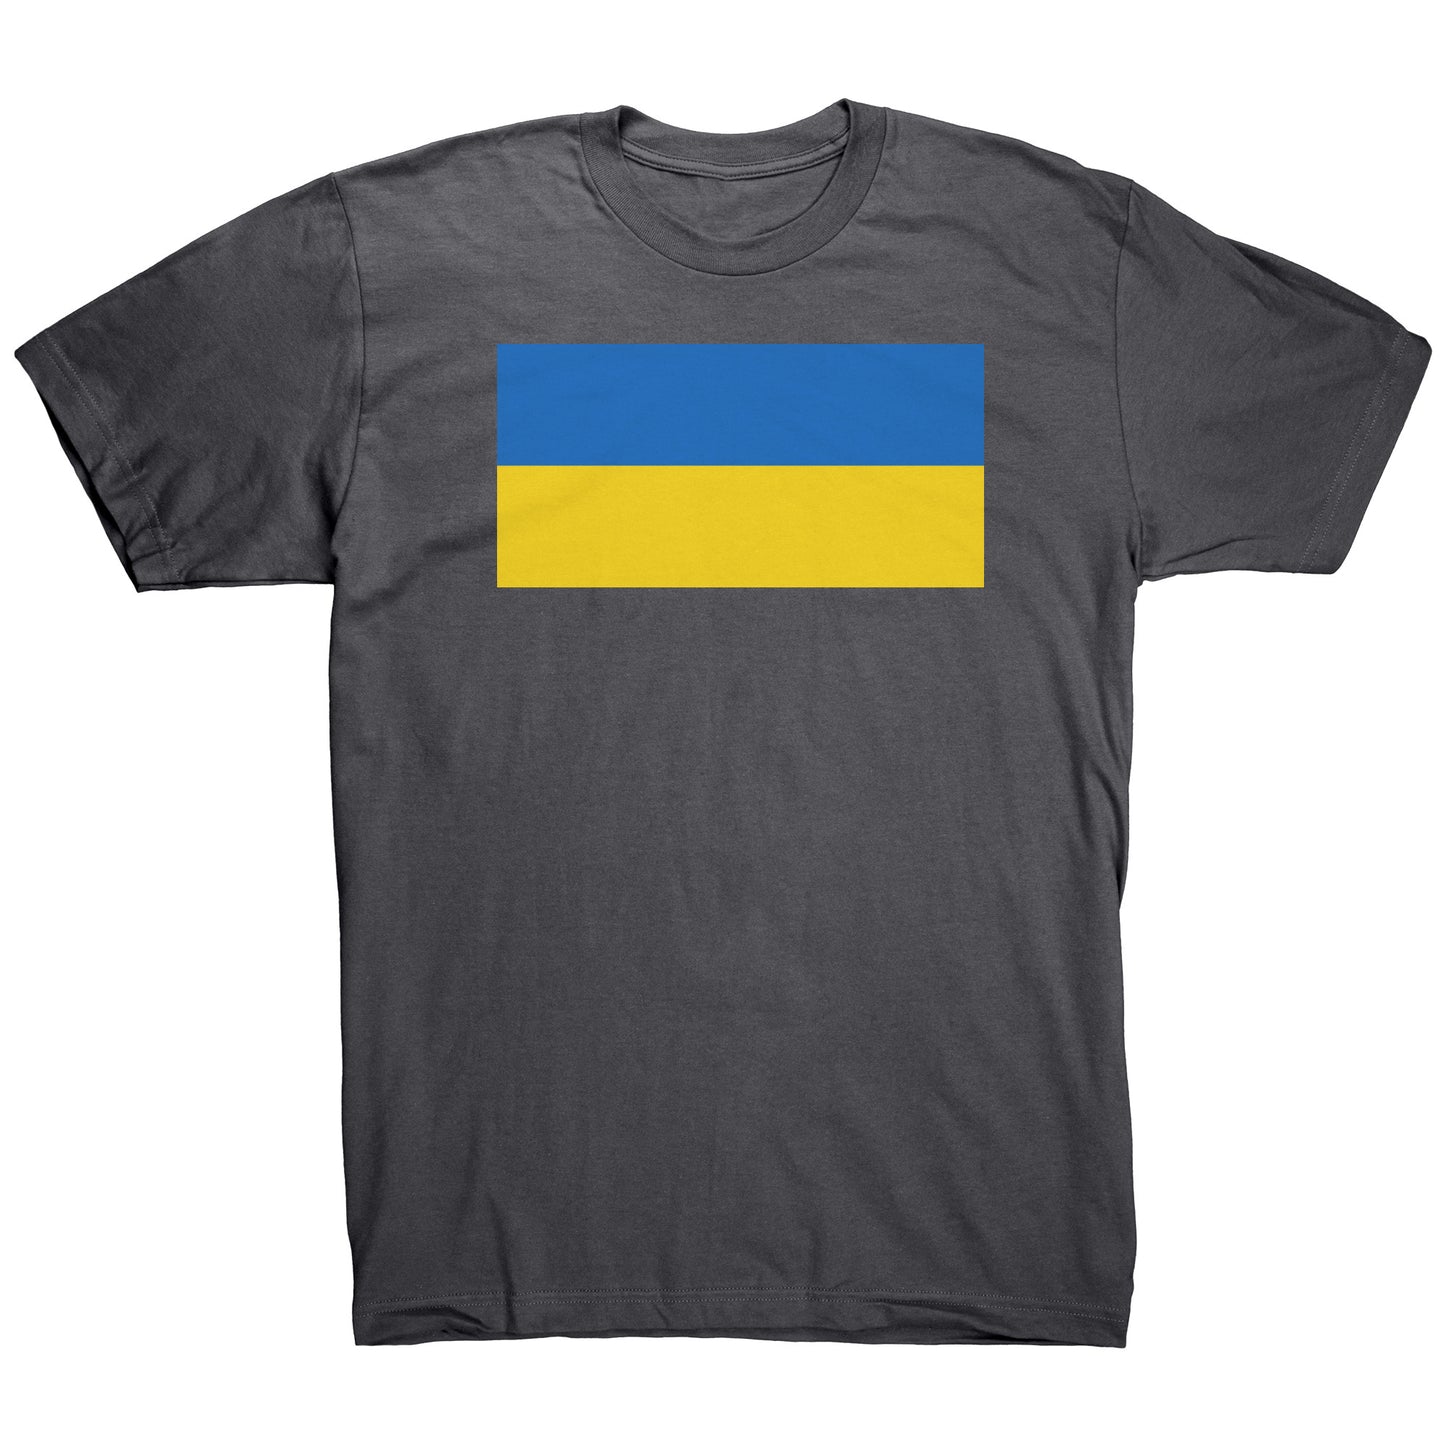 The Flag of Ukraine